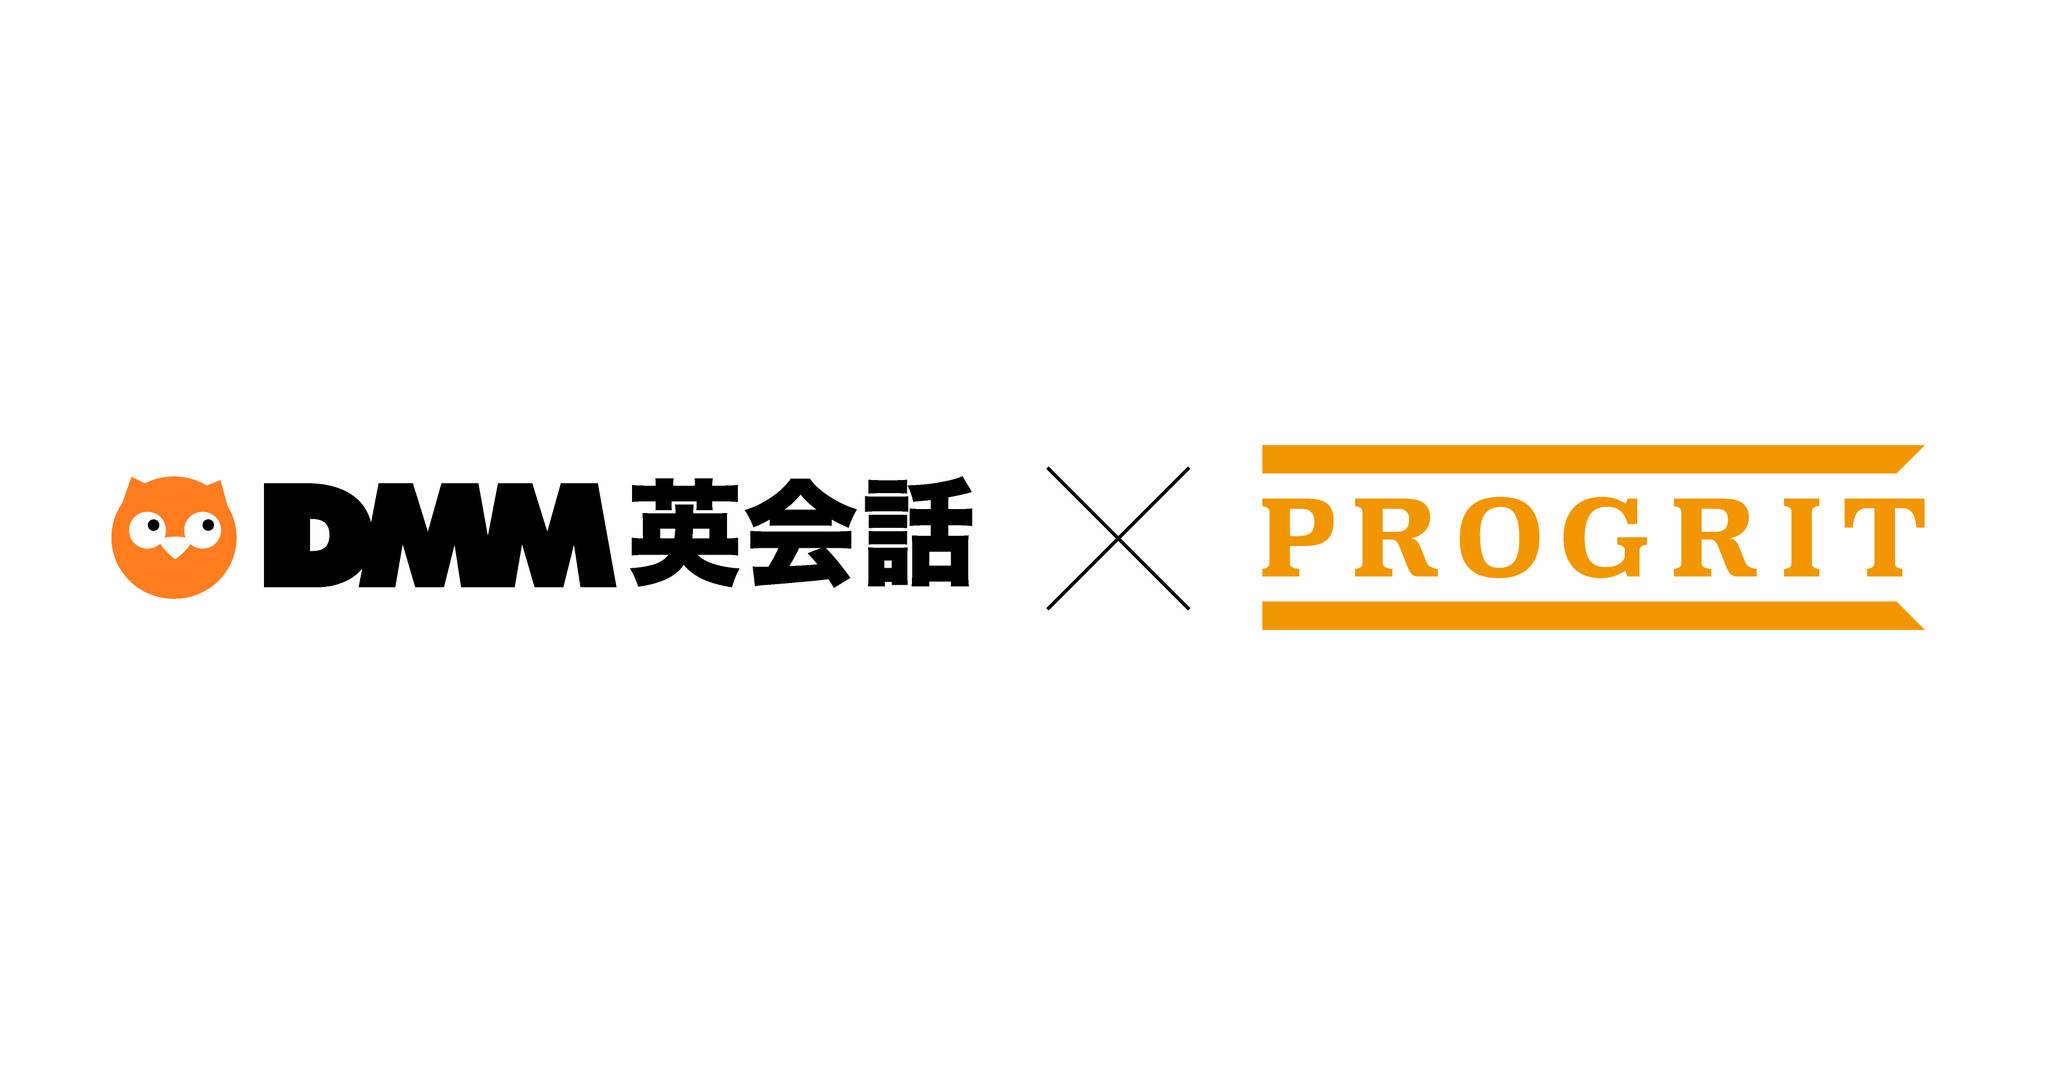 Dmm英会話 英語コーチング プログリット Progrit とサービス提携 合同会社dmm Comのプレスリリース